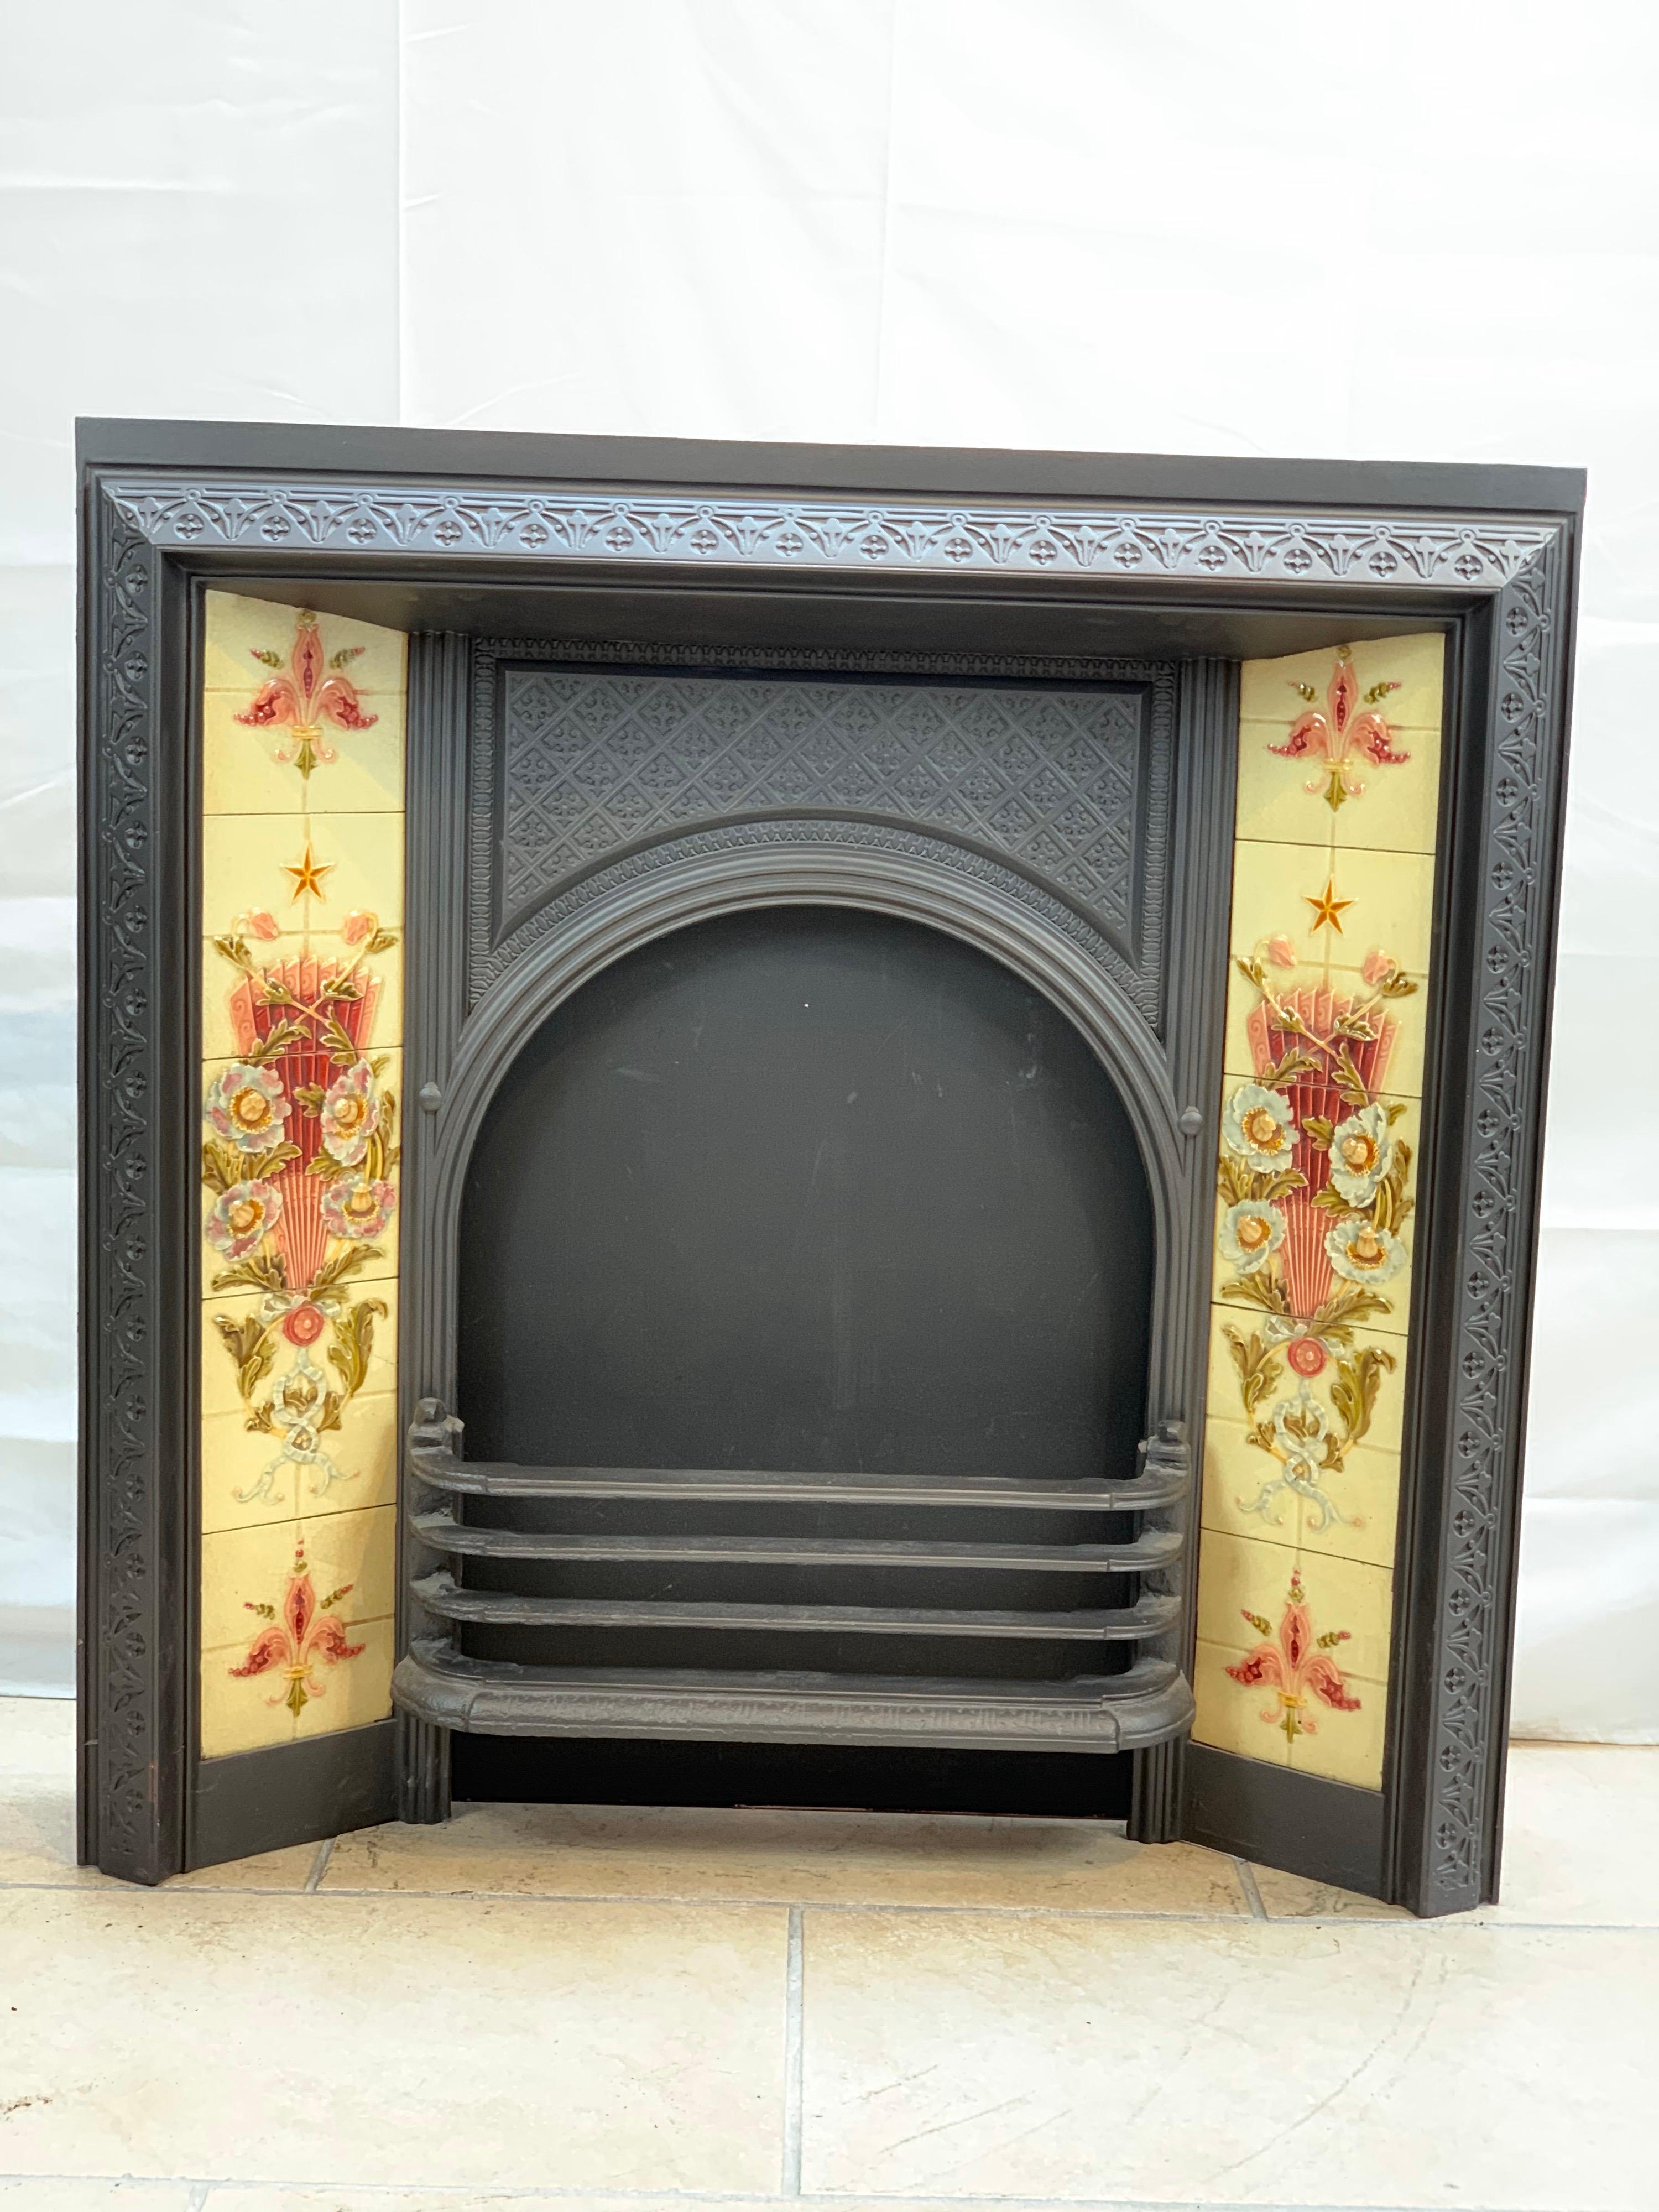 A Victorian original tiled cast iron fireplace insert with beautiful original tile panels.